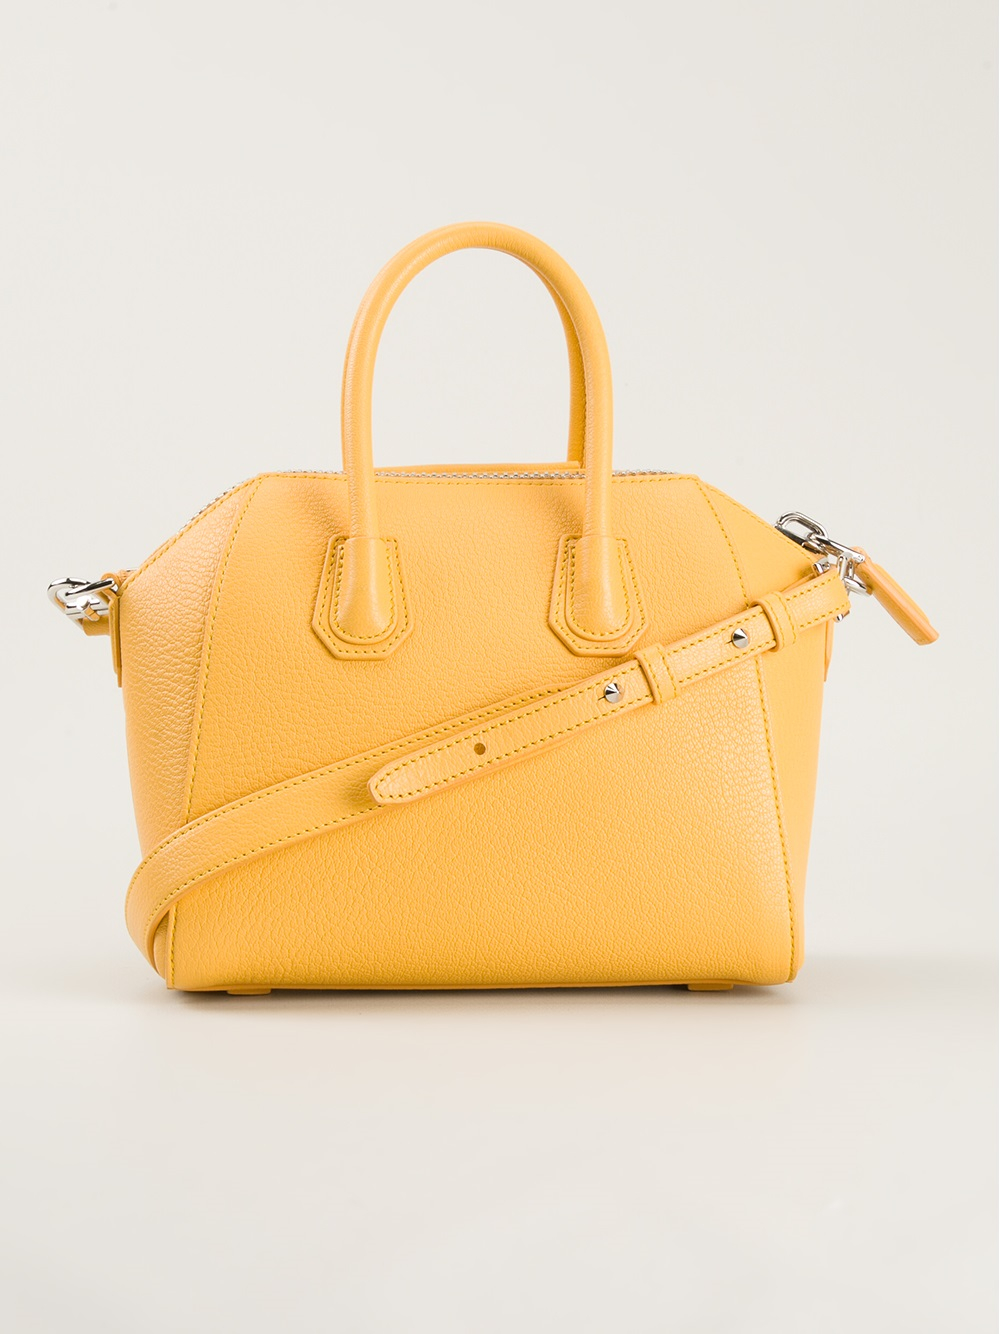 Lyst - Givenchy Small Antigona Shoulder Bag in Yellow